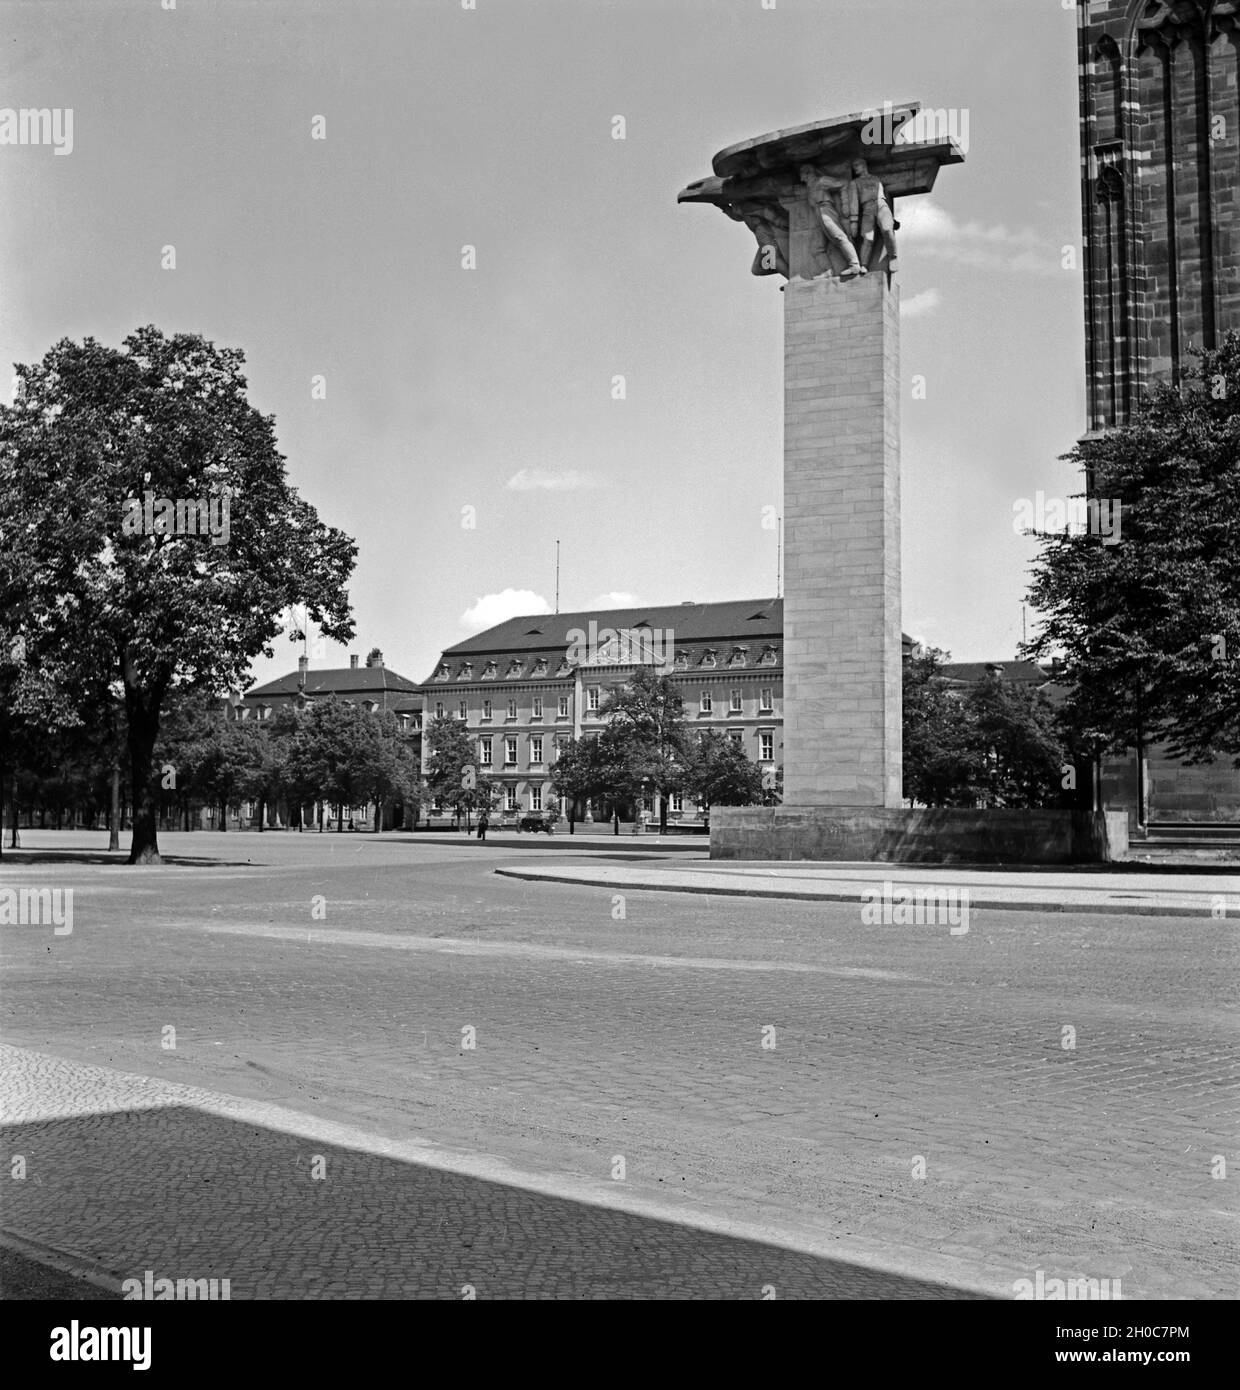 Das SA Ehrenmal direkt am Dom von Magdeburg, Deutschland 1930er Jahre. SA Nazi memorial accanto alla Cattedrale di Magdeburgo, Germania 1930s. Foto Stock